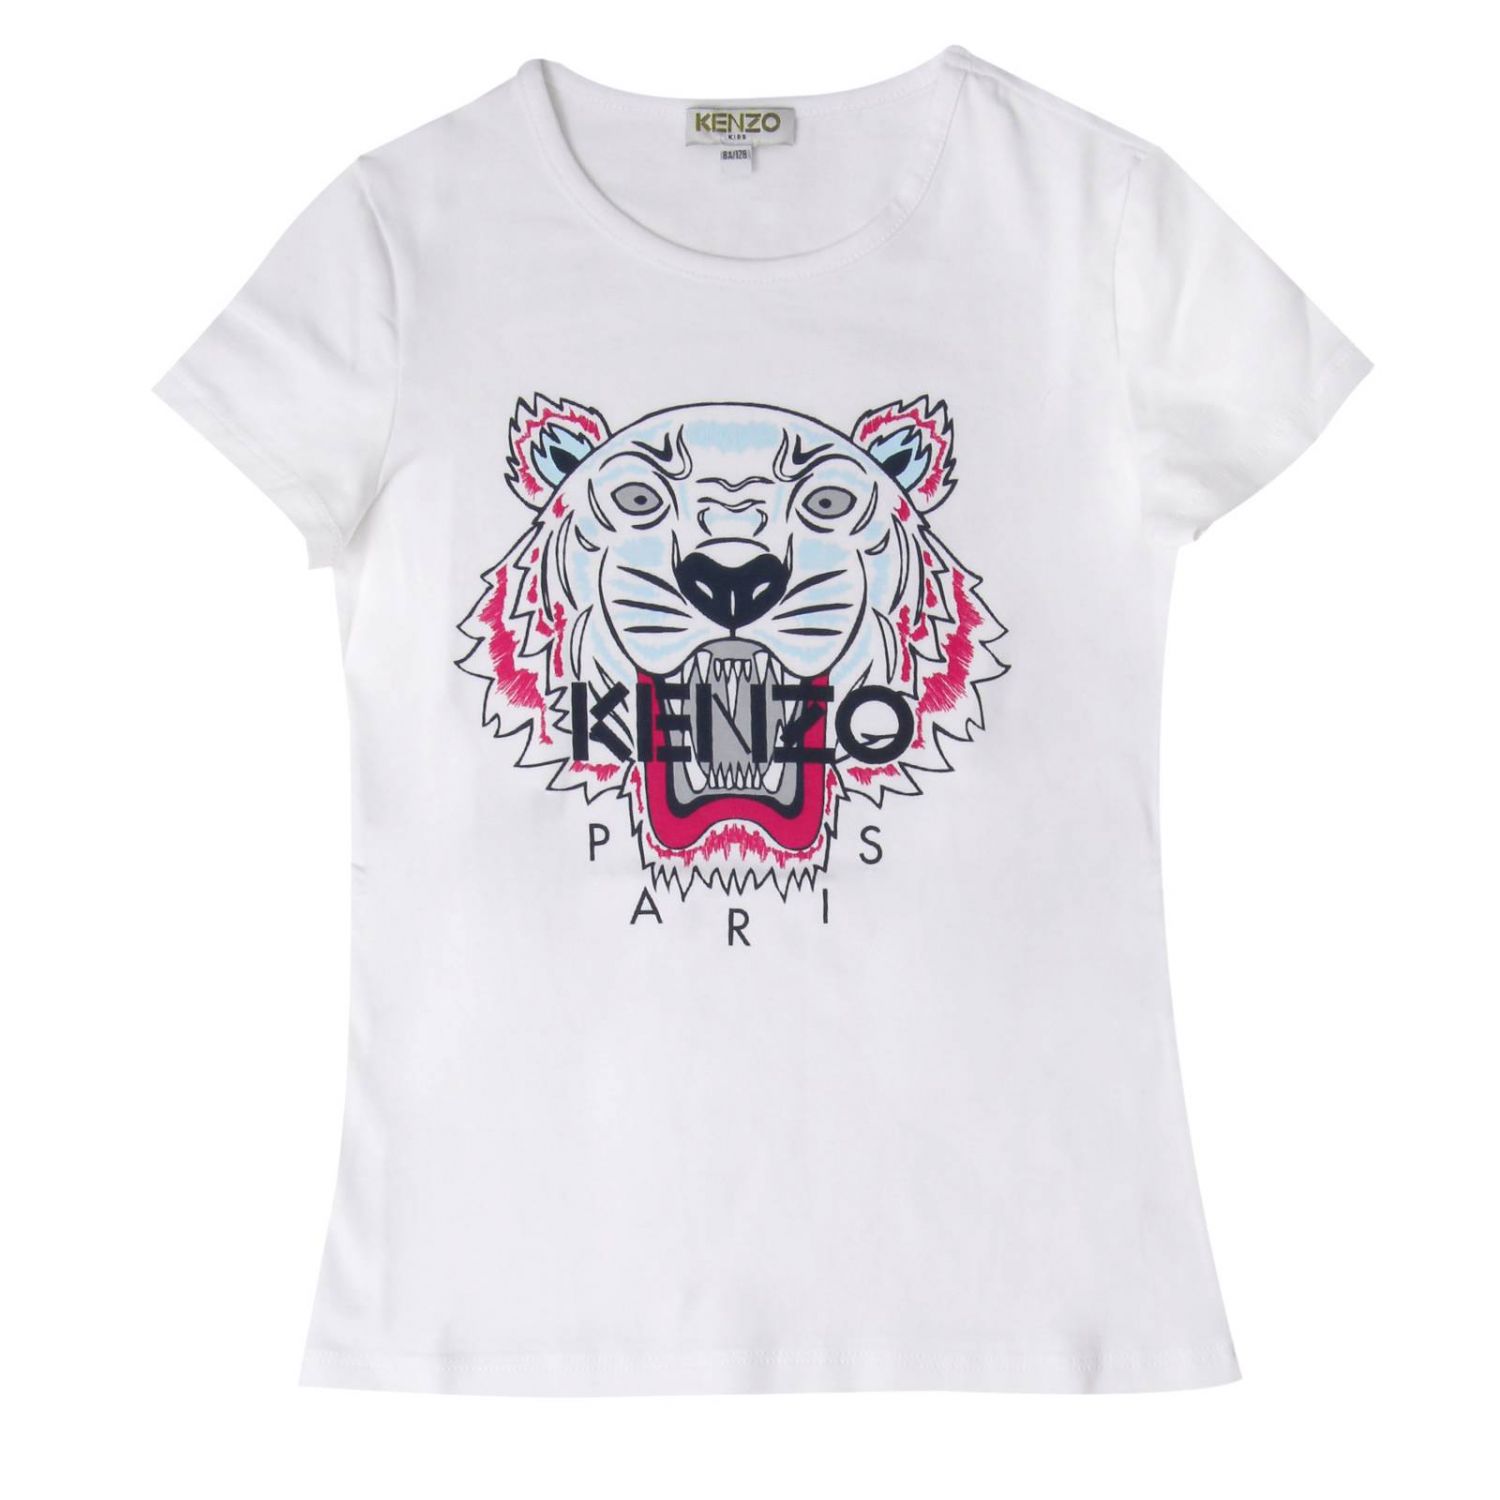 kenzo girl shirts